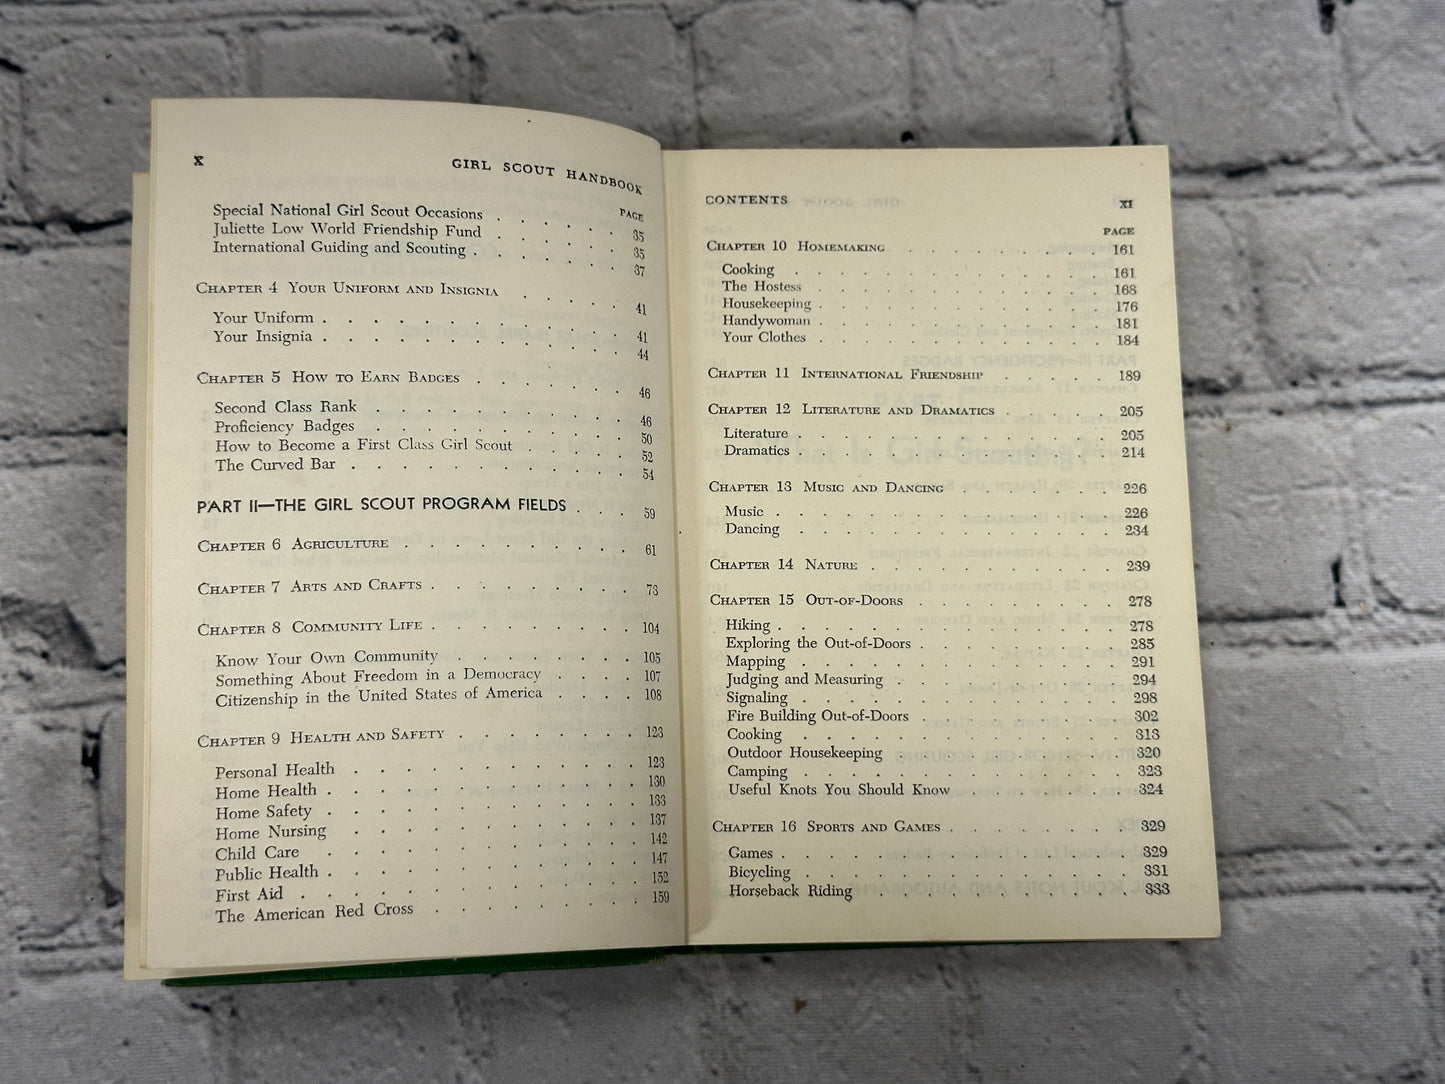 Girl Scout Handbook: Intermediate Program[1947 · New Edition · First Impression]